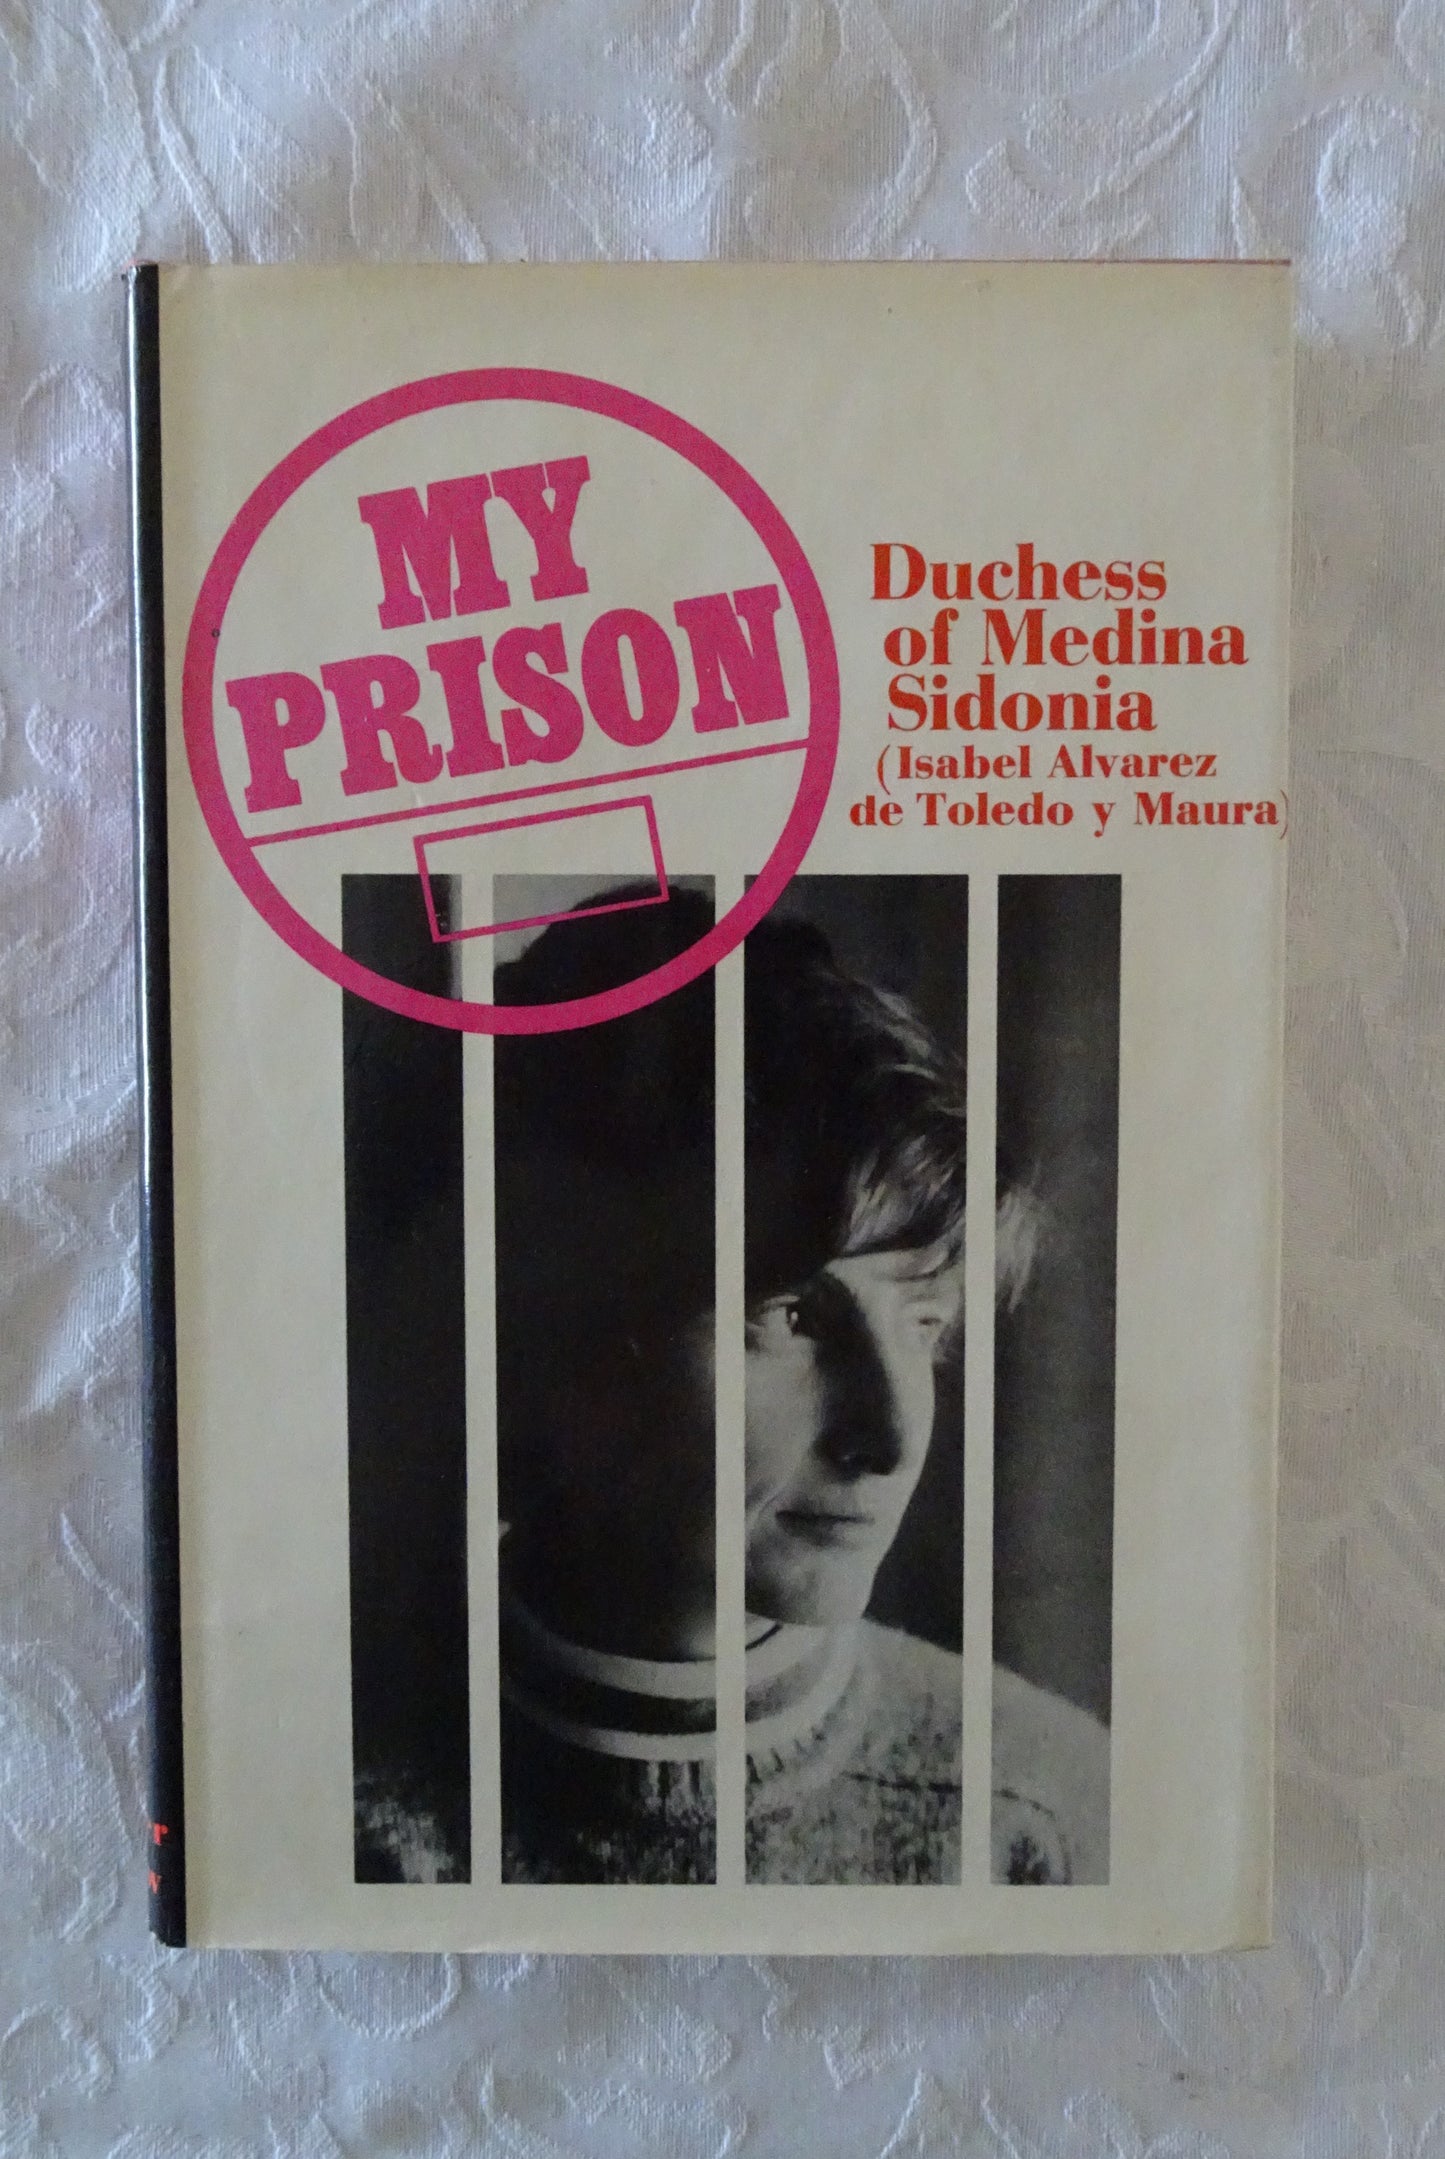 My Prison  Isabel Alvarez de Toledo y Maura,  Duchess of Medina Sidonia  Translated from the Spanish by Herma Briffault